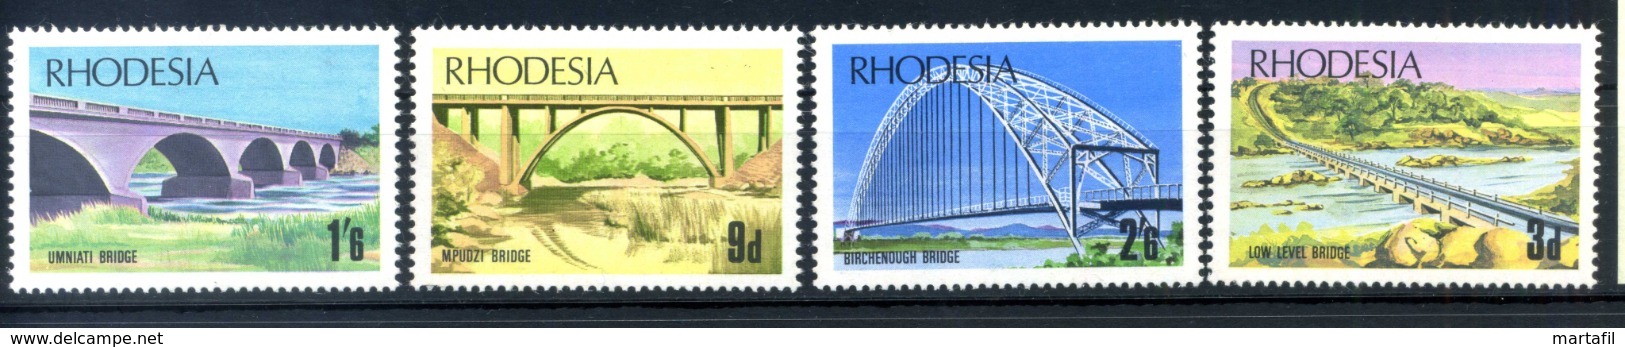 1969 RHODESIA SET MNH ** - Rhodesia (1964-1980)